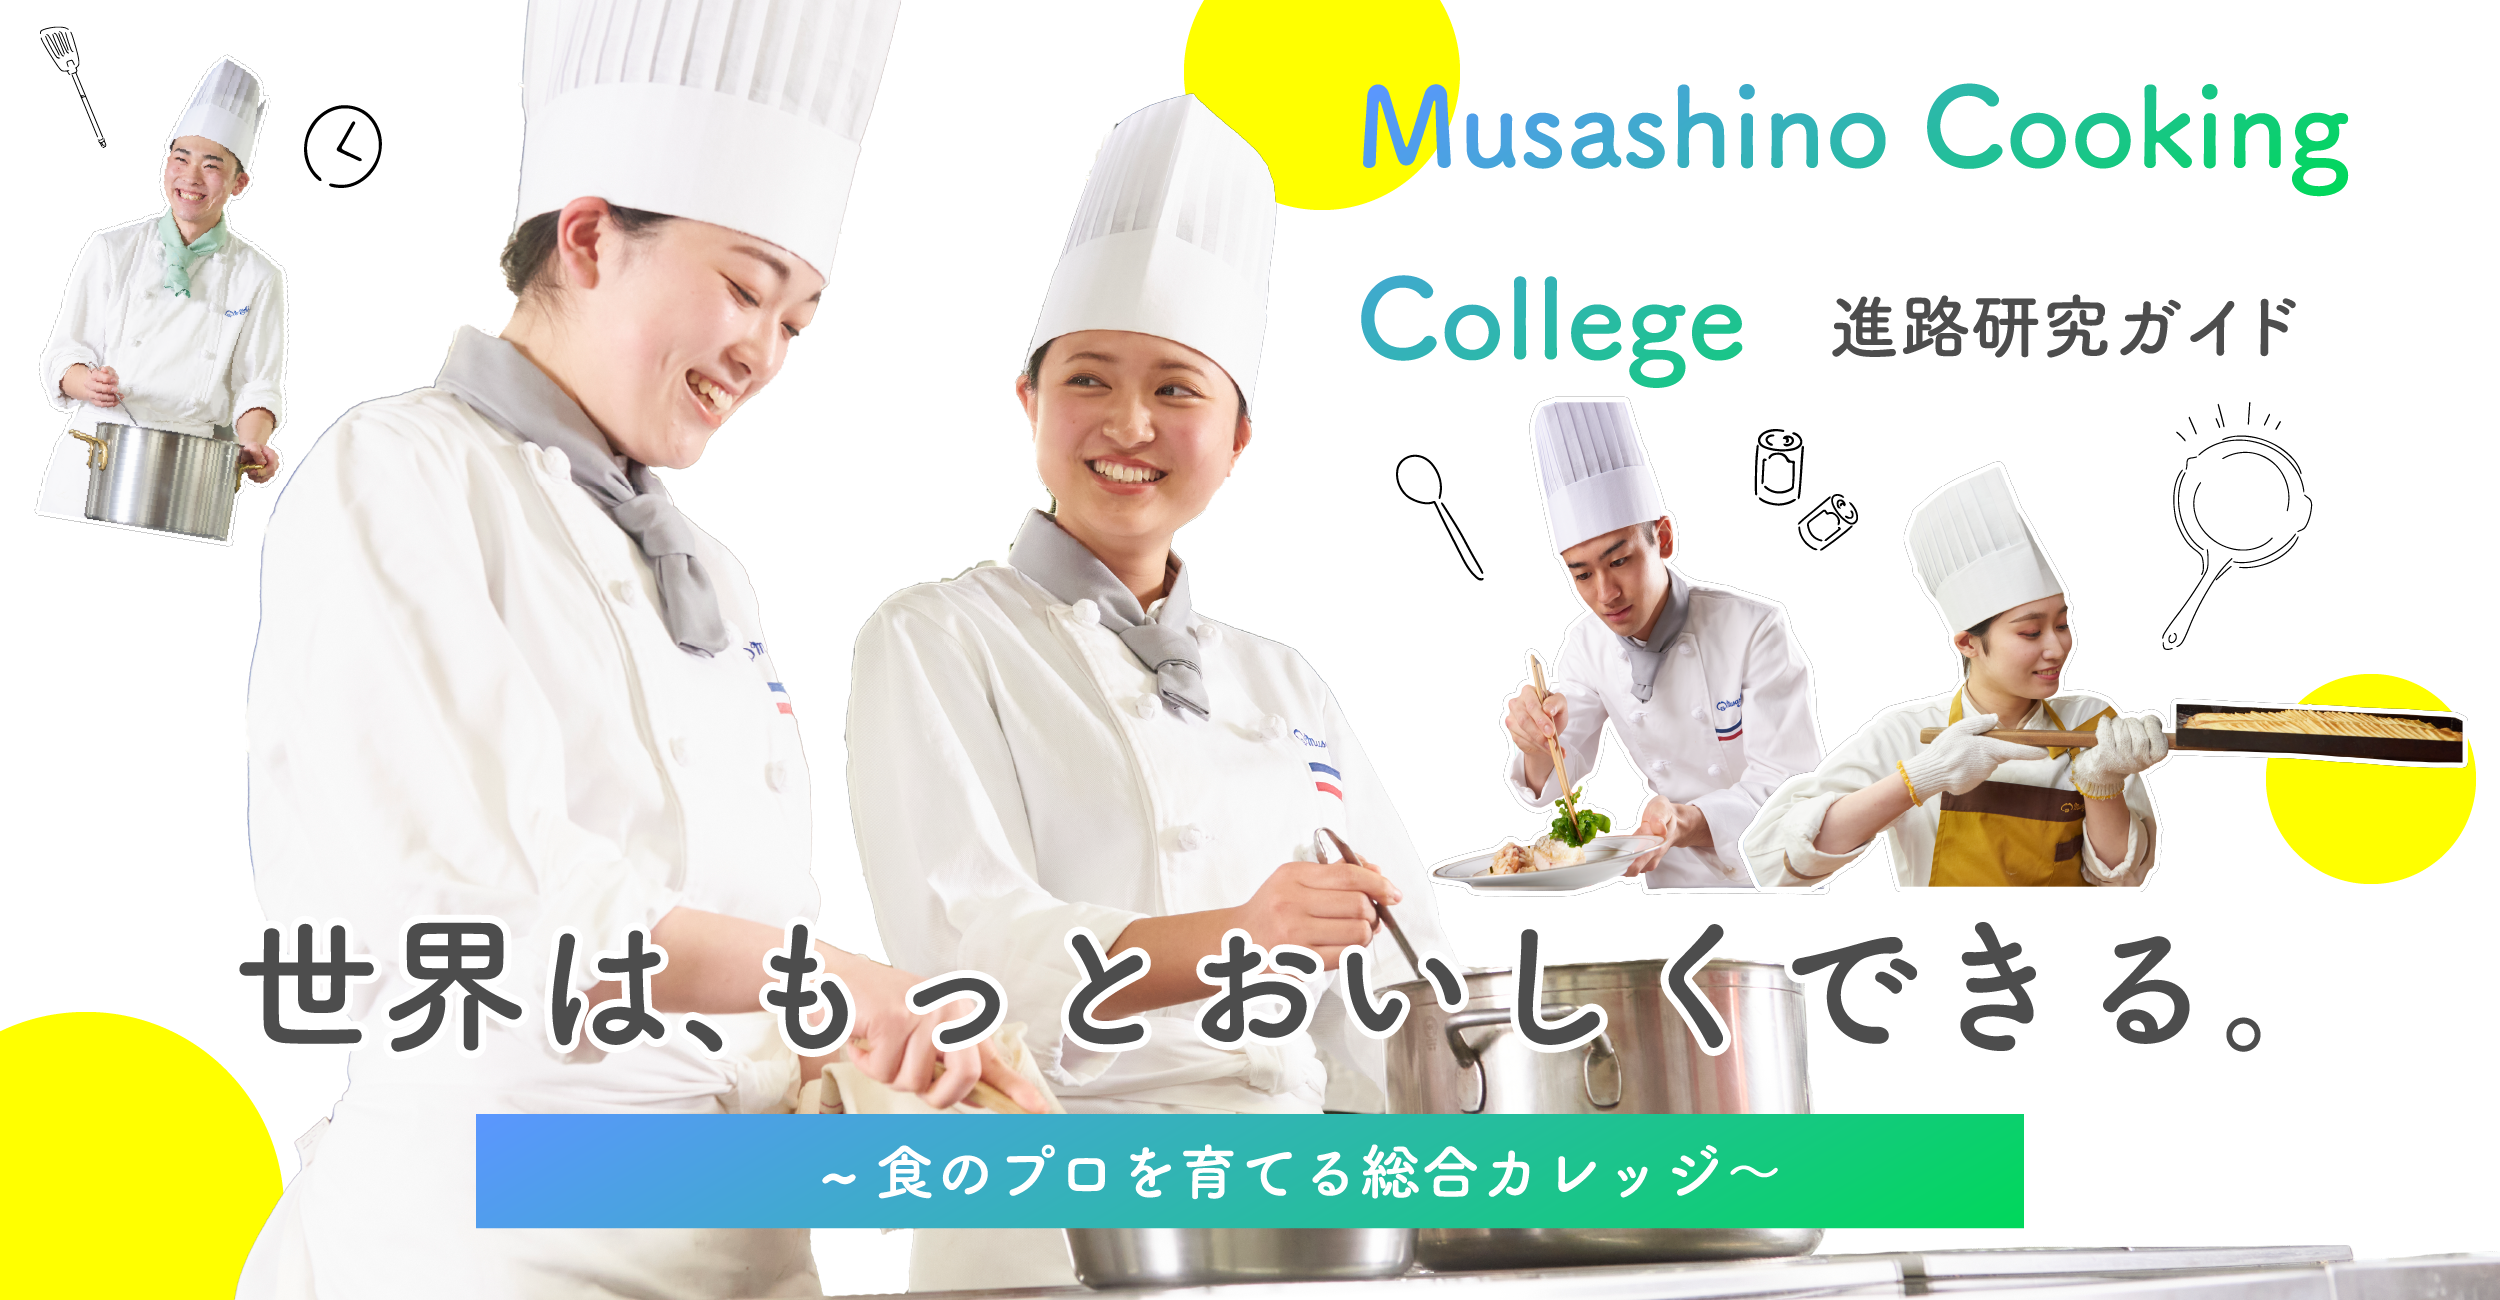 Musashino Cooking College